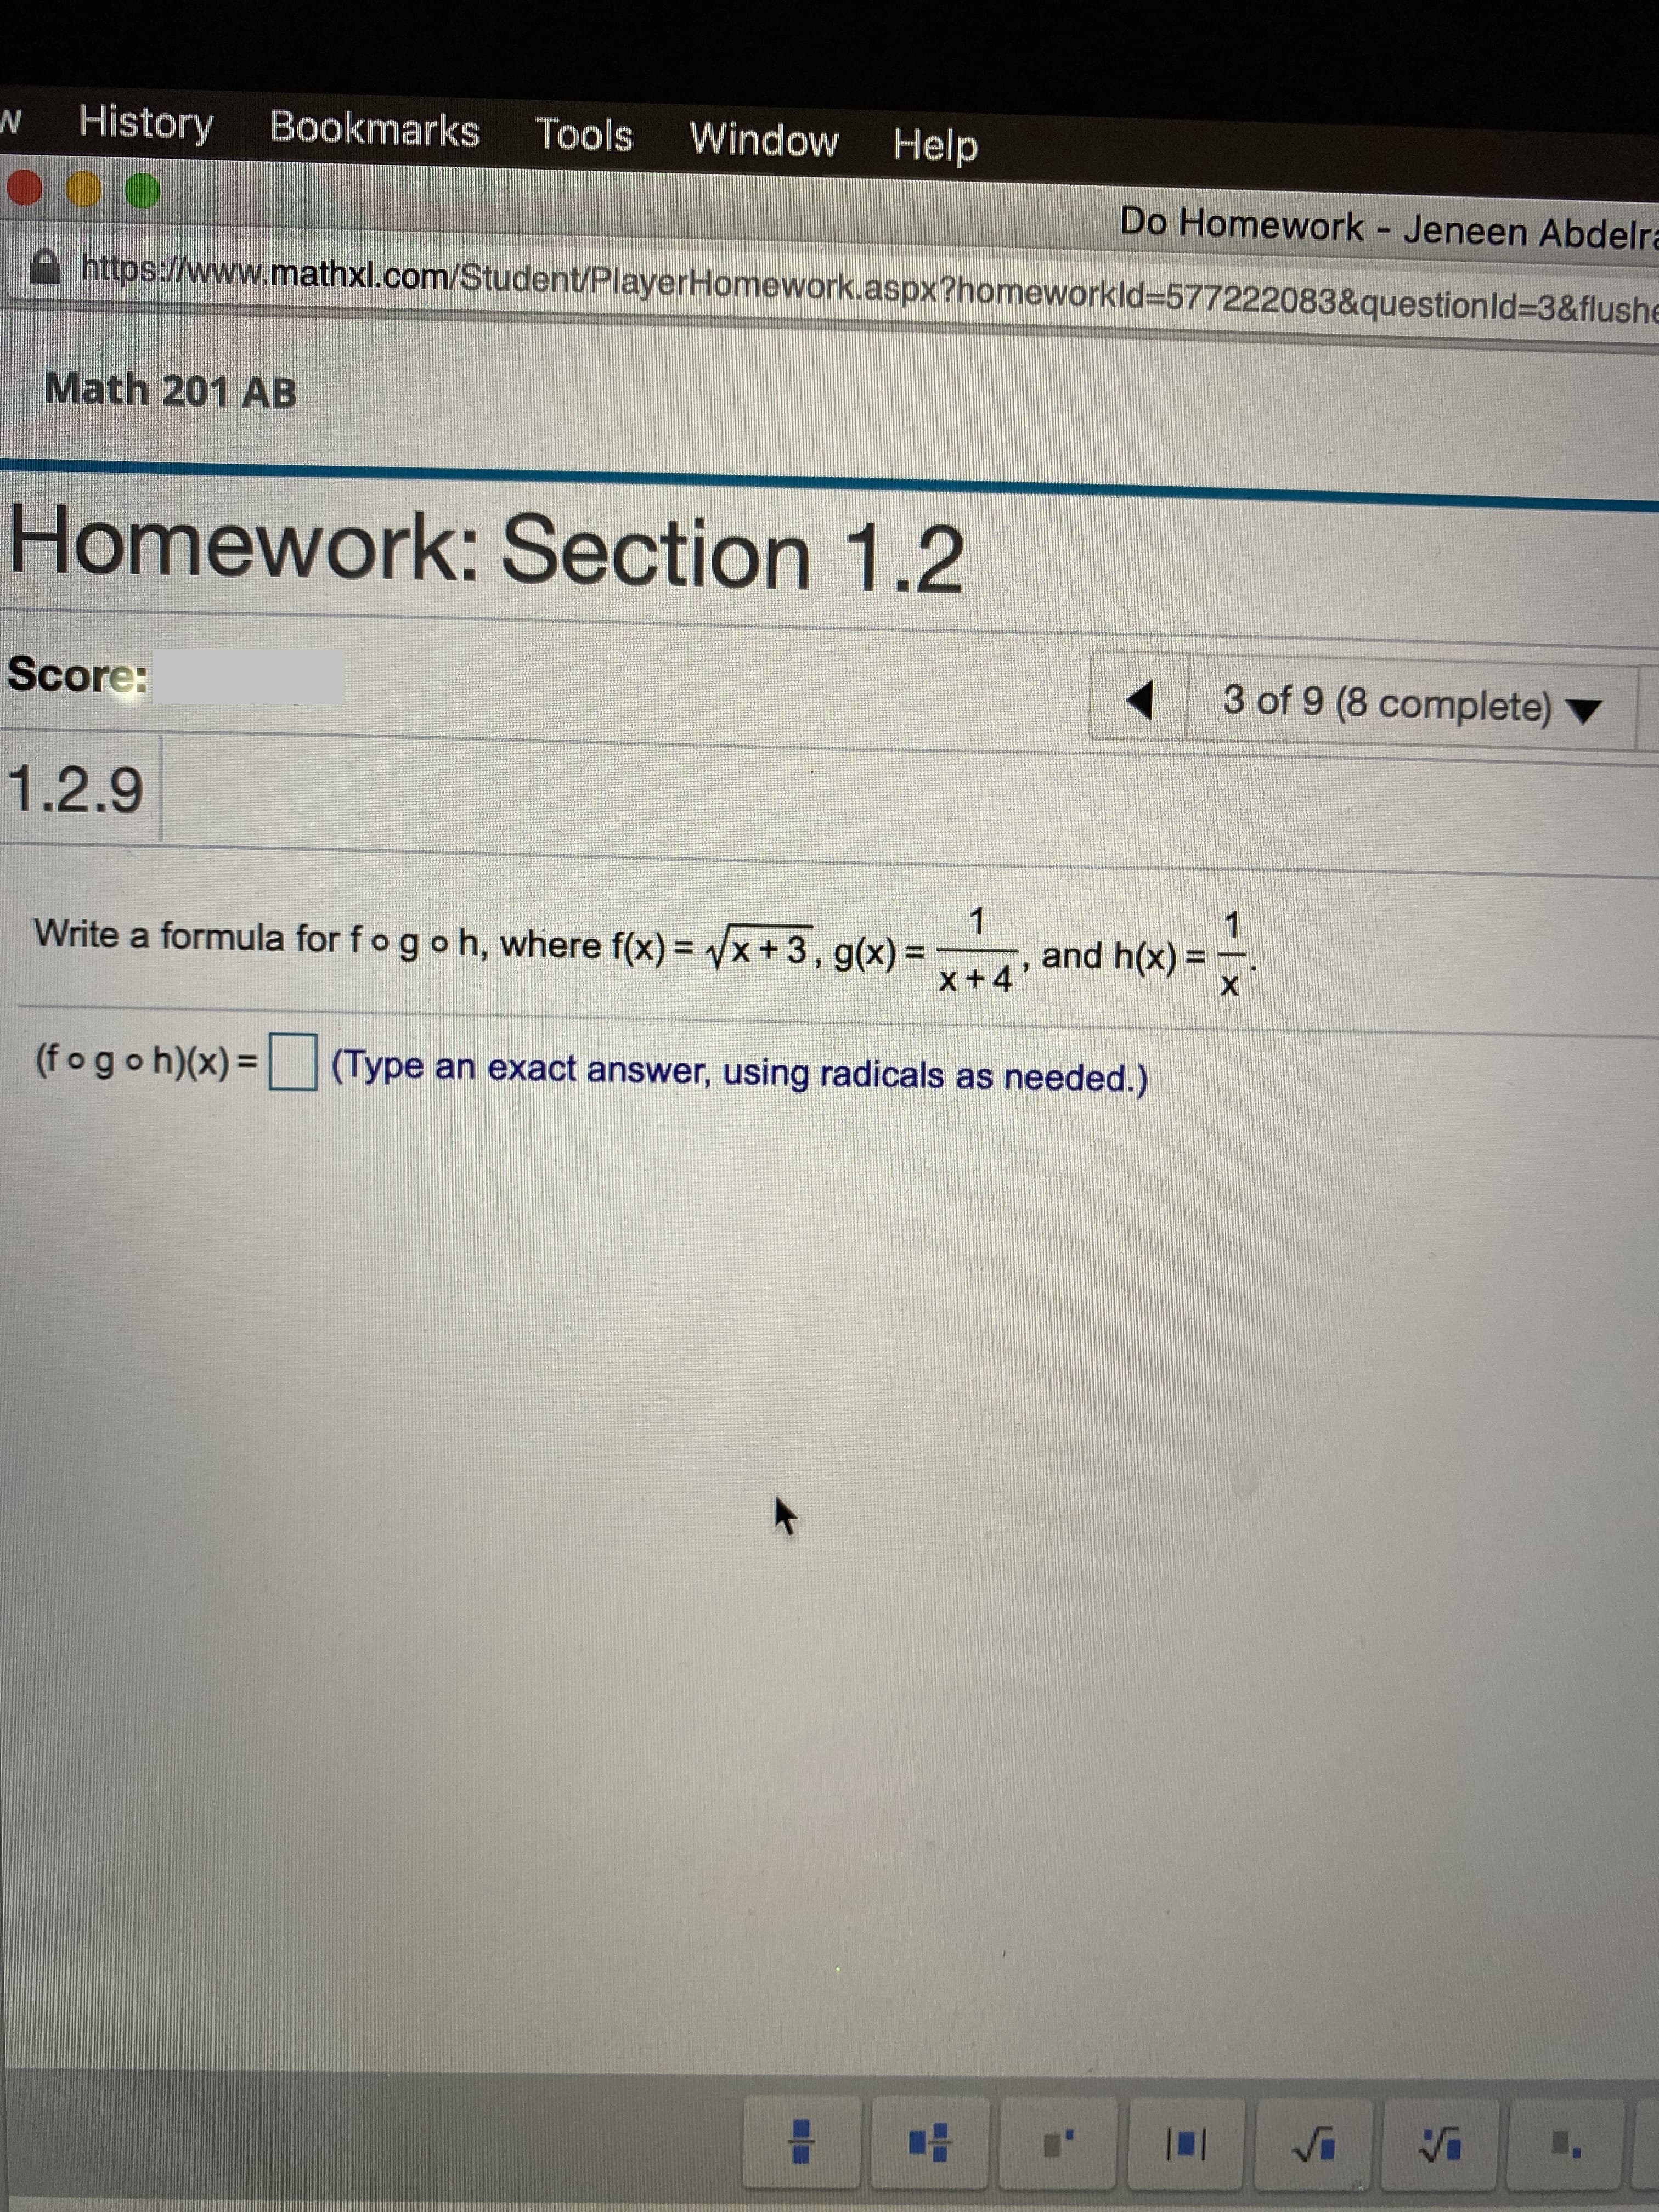 History
Bookmarks
Tools
Window Help
Do Homework - Jeneen Abdelra
https://www.mathxl.com/Student/PlayerHomework.aspx?homeworkld3577222083&questionld3&flushe
Math 201 AB
Homework: Section 1.2
Score:
3 of 9 (8 complete)
1.2.9
1
Write a formula for fogoh, where f(x) = Vx + 3, g(x) =
1
and h(x) =
%3D
x+4'
(fogoh)(x) =
(Type an exact answer, using radicals as needed.)
